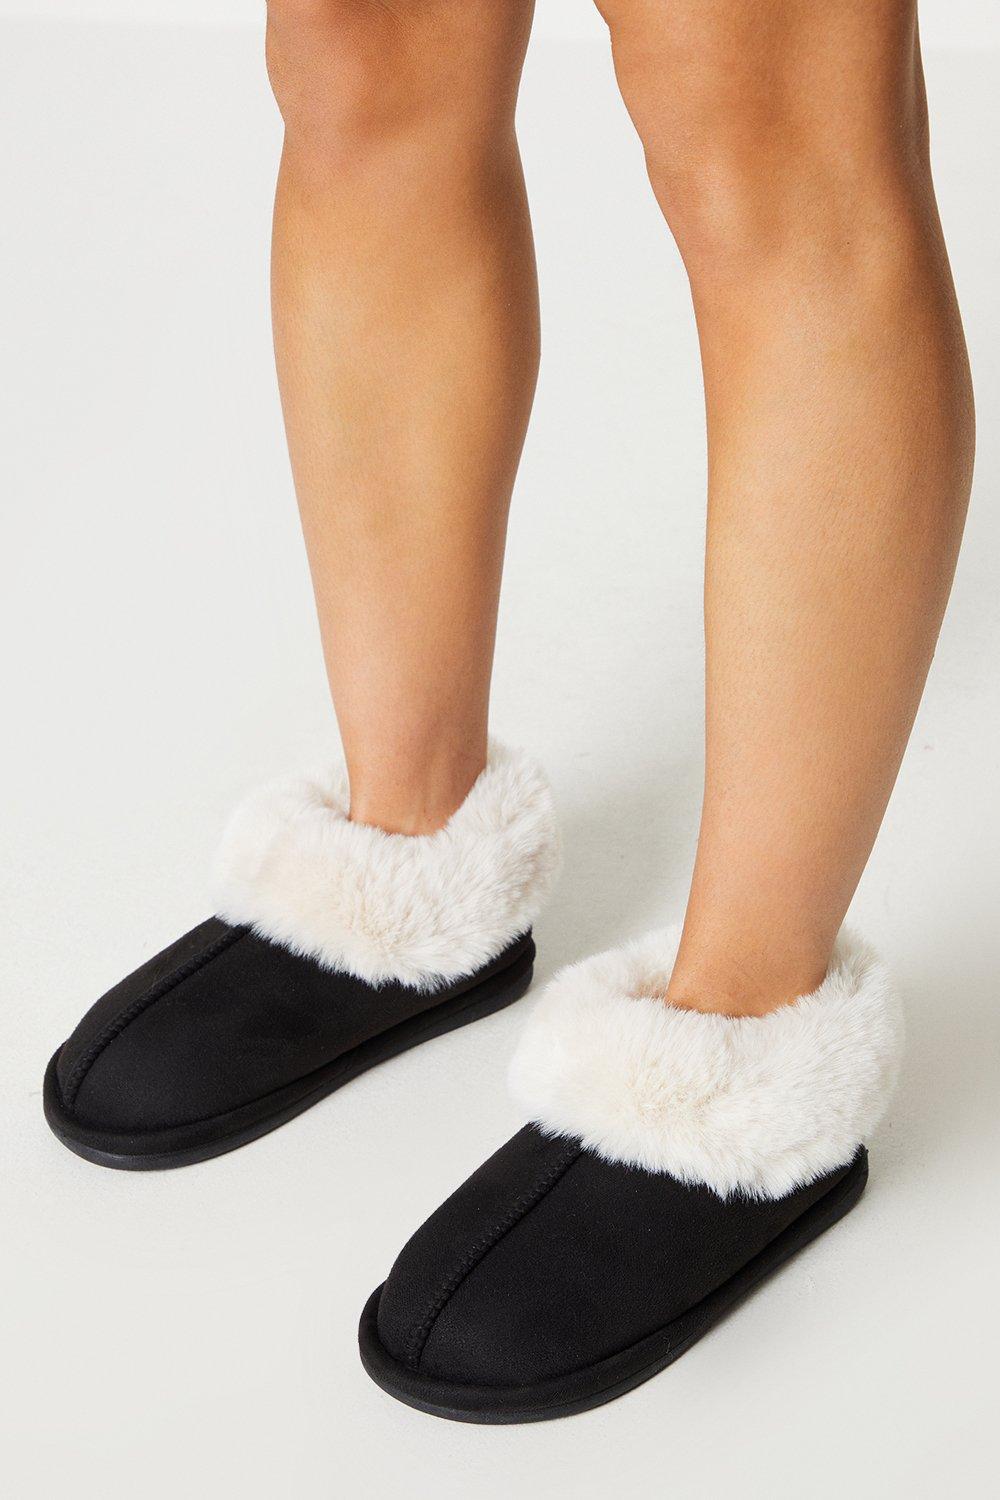 Women’s Maggi Faux Fur Sheepskin Fur Bootie Slippers - natural black - 4